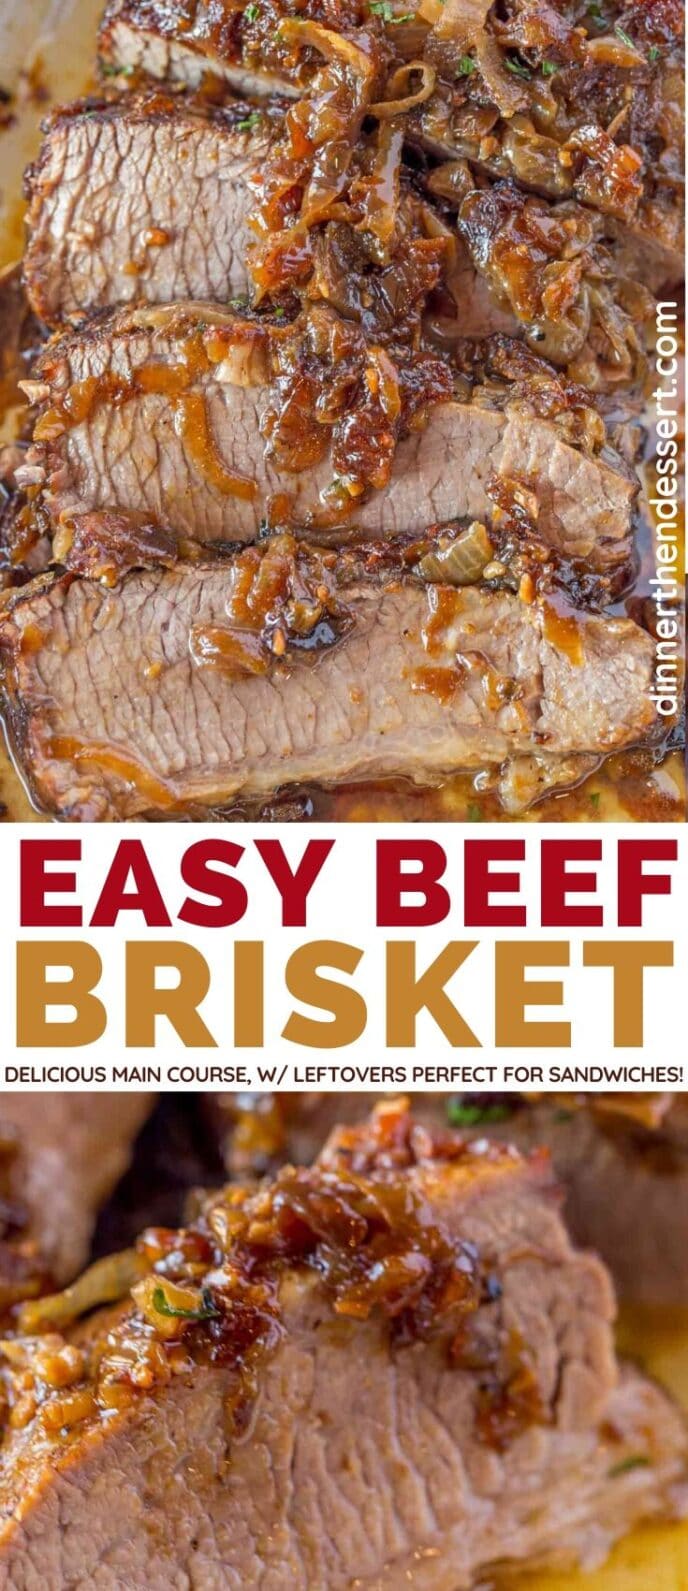 Easy Beef Brisket collage